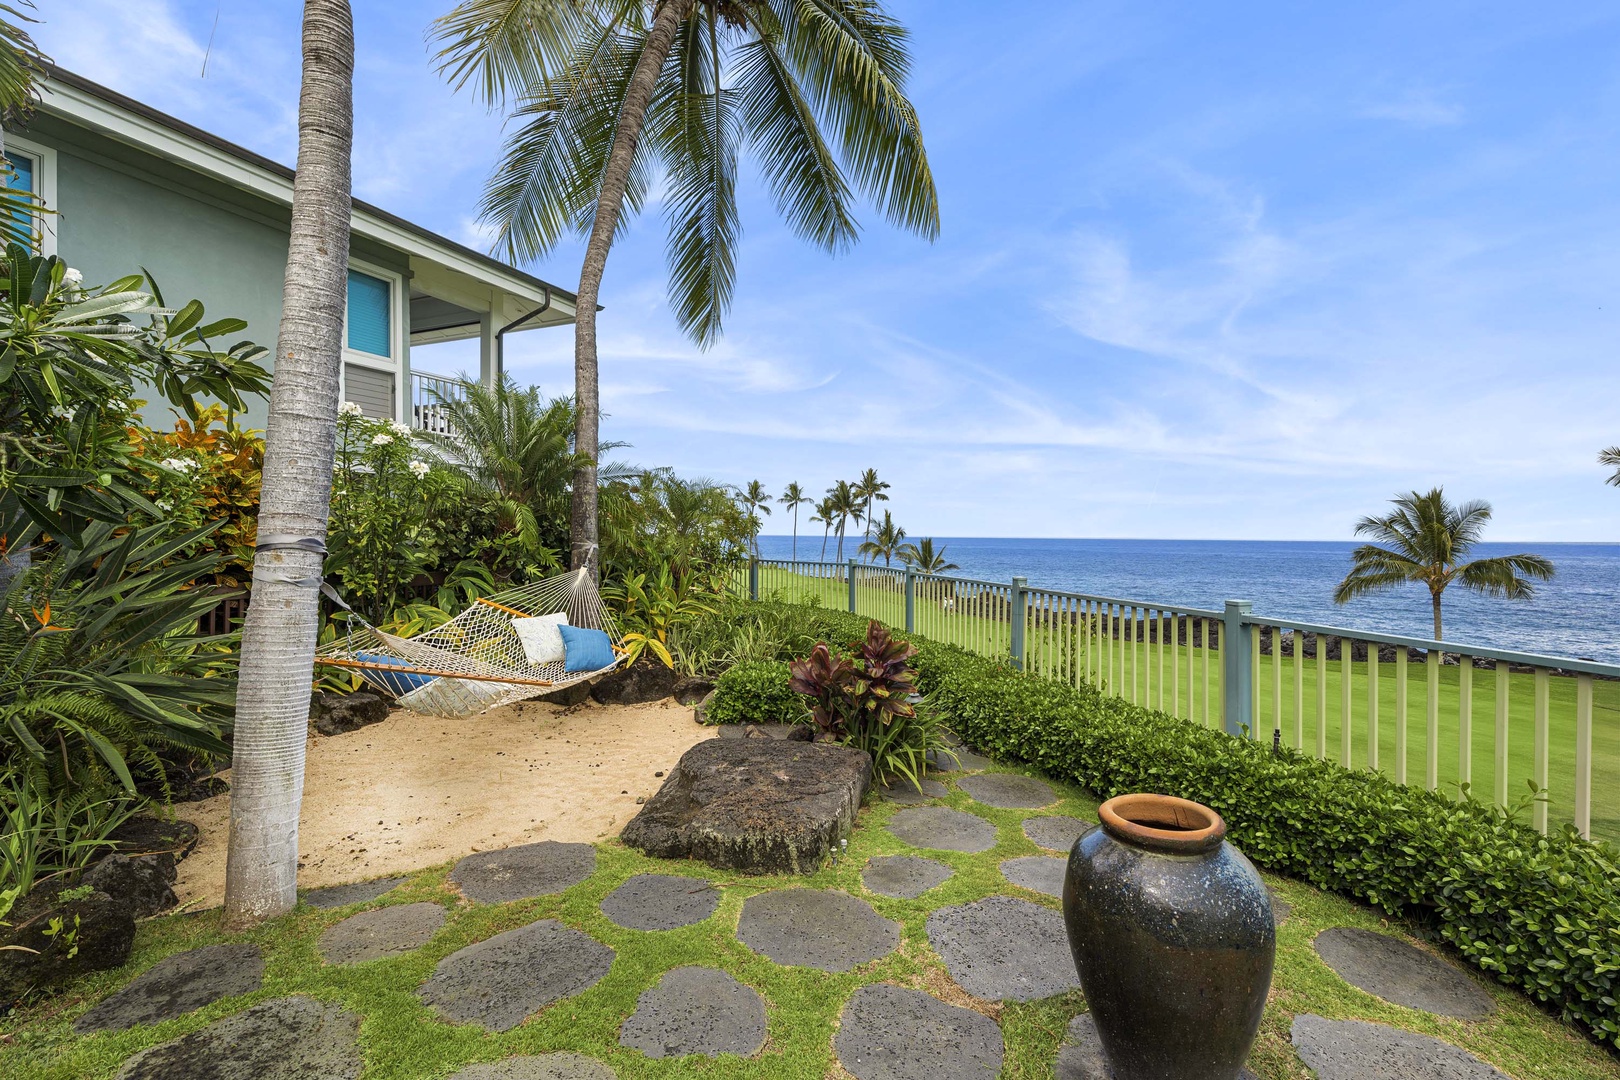 Kailua Kona Vacation Rentals, Holua Kai #20 - Nothing better than a hammock in the sand!